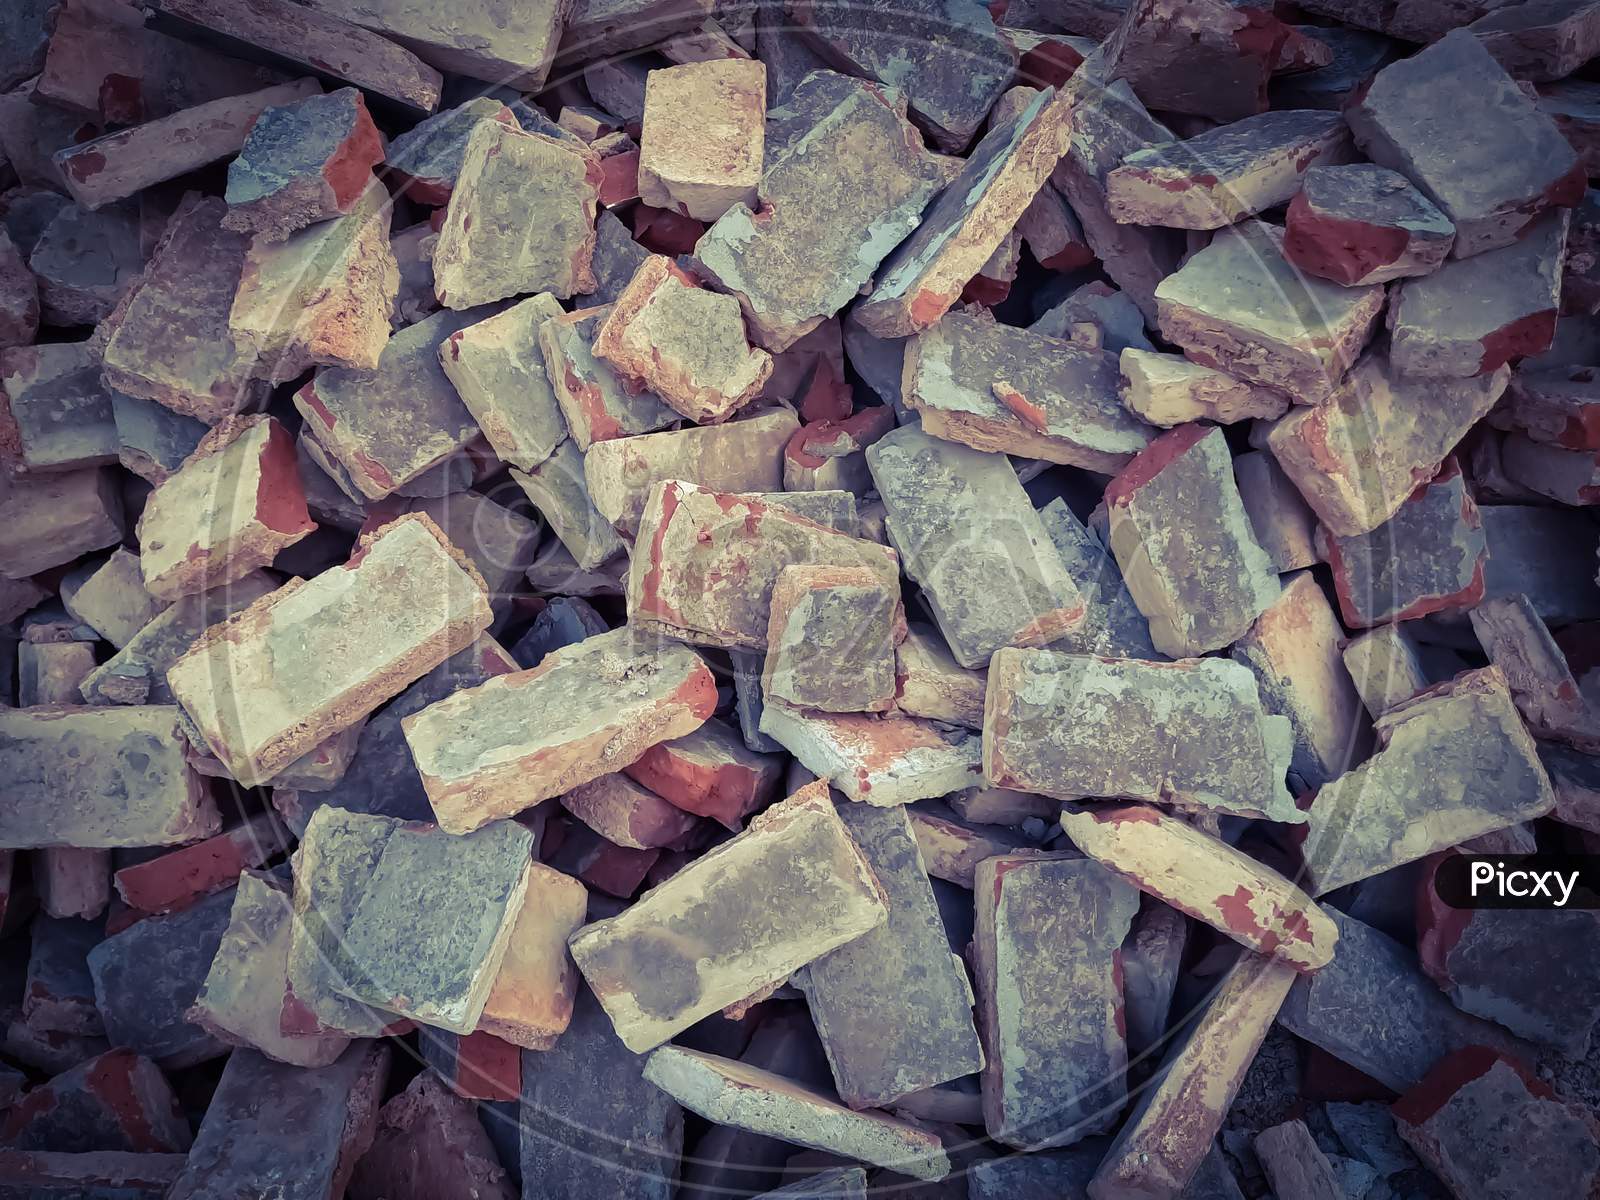 A pile of bricks